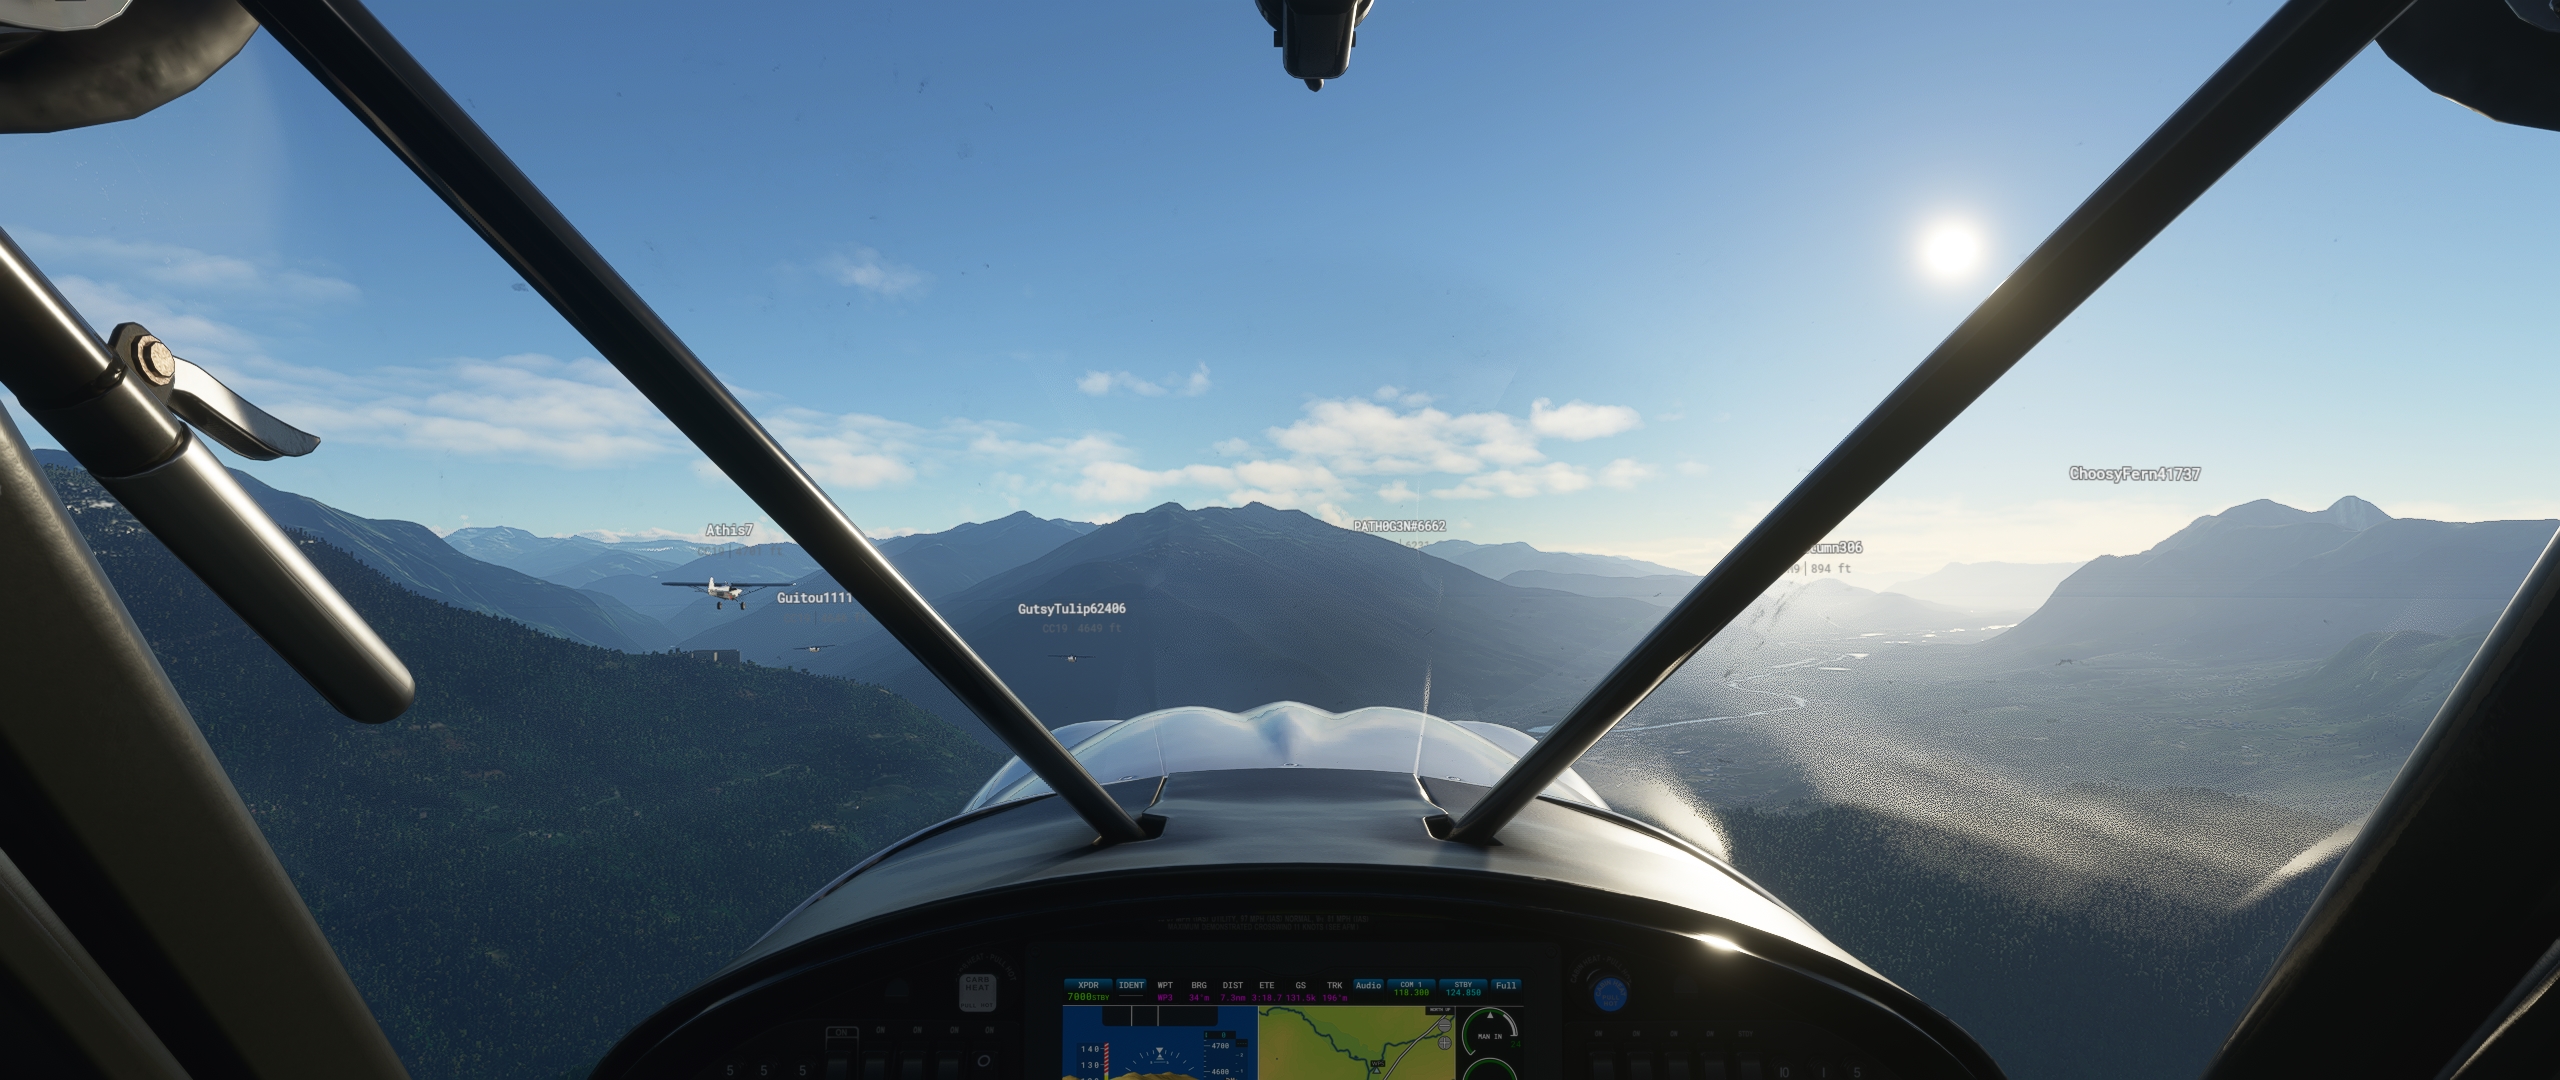 2020-11-28 17_38_05-Microsoft Flight Simulator - 1.11.6.0.jpg